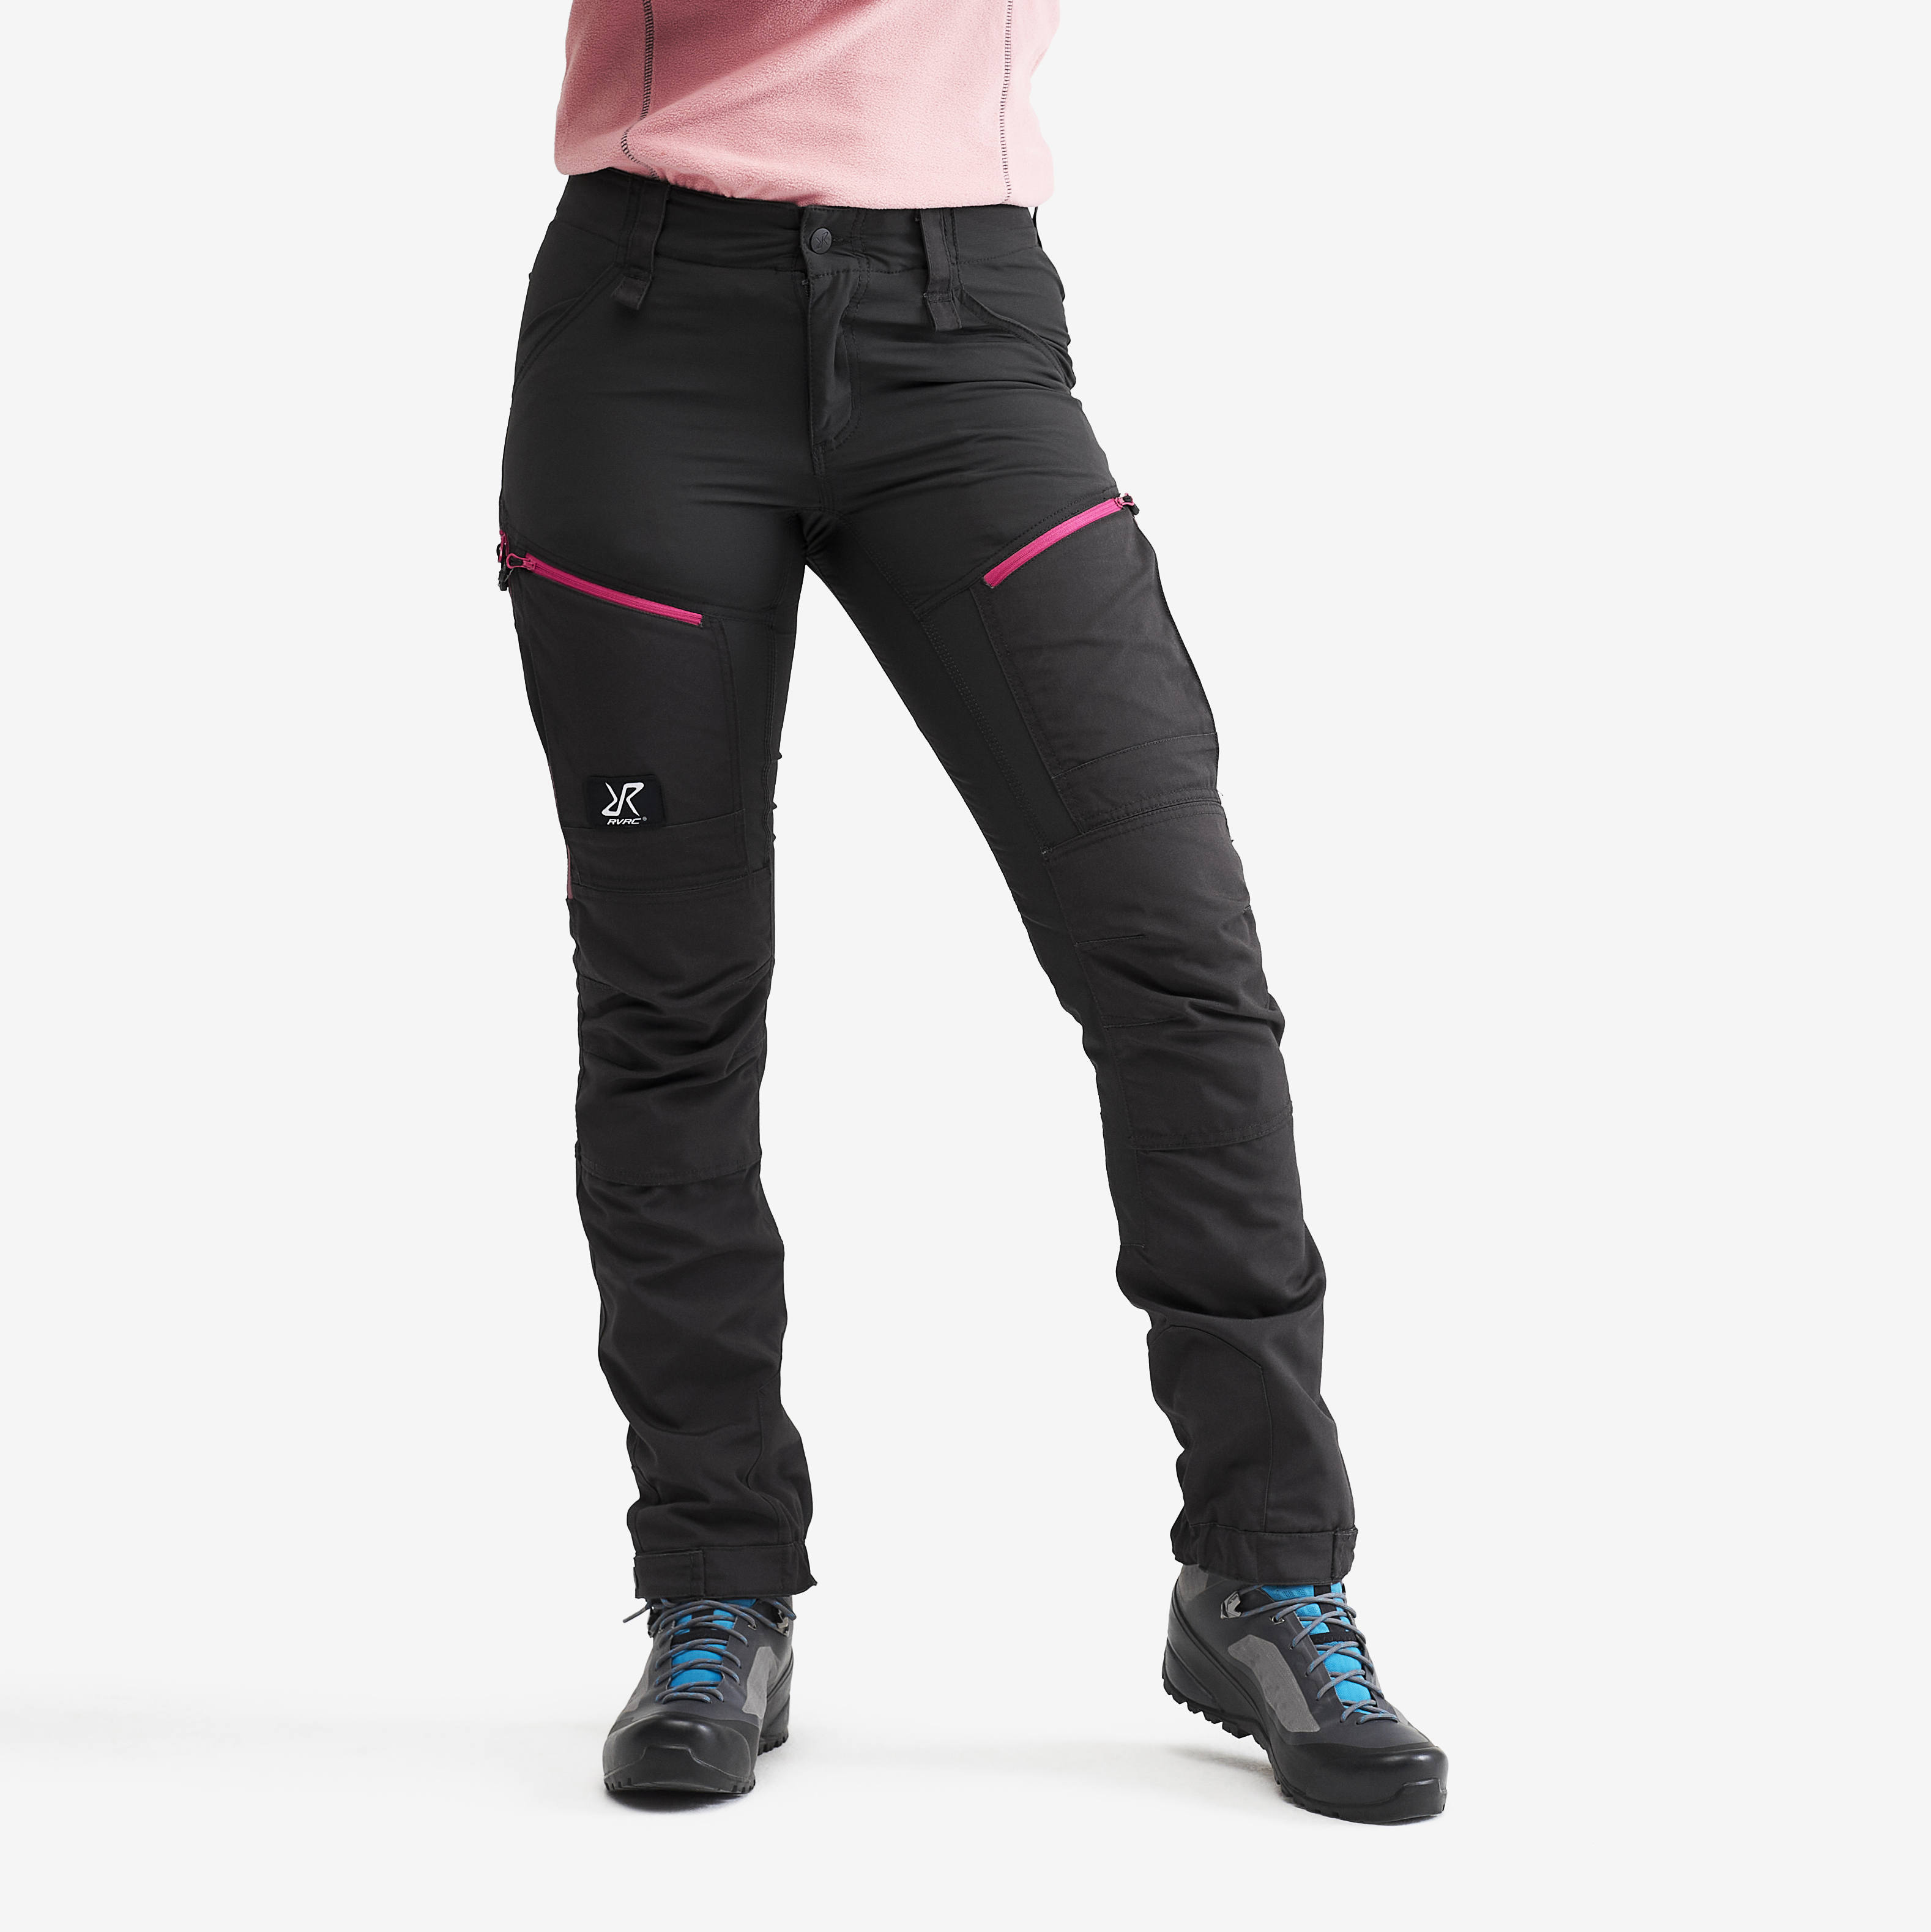 RVRC GP Pro Pants Grey/Pink